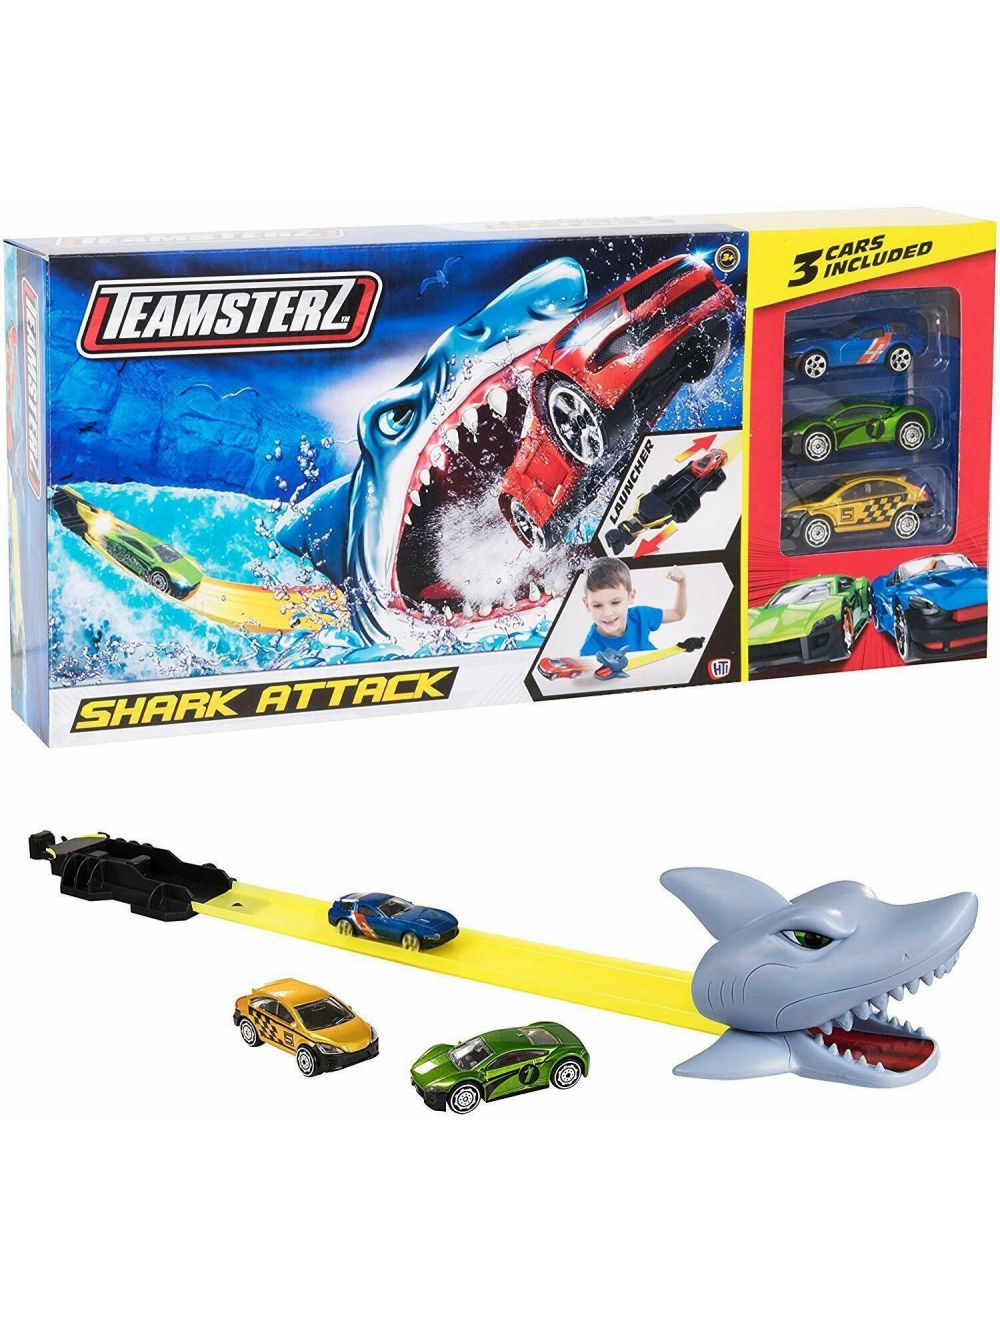 Unibos Shark Attack Track Set Kids Metal Die-cast Toy Vehicles Aged 3+